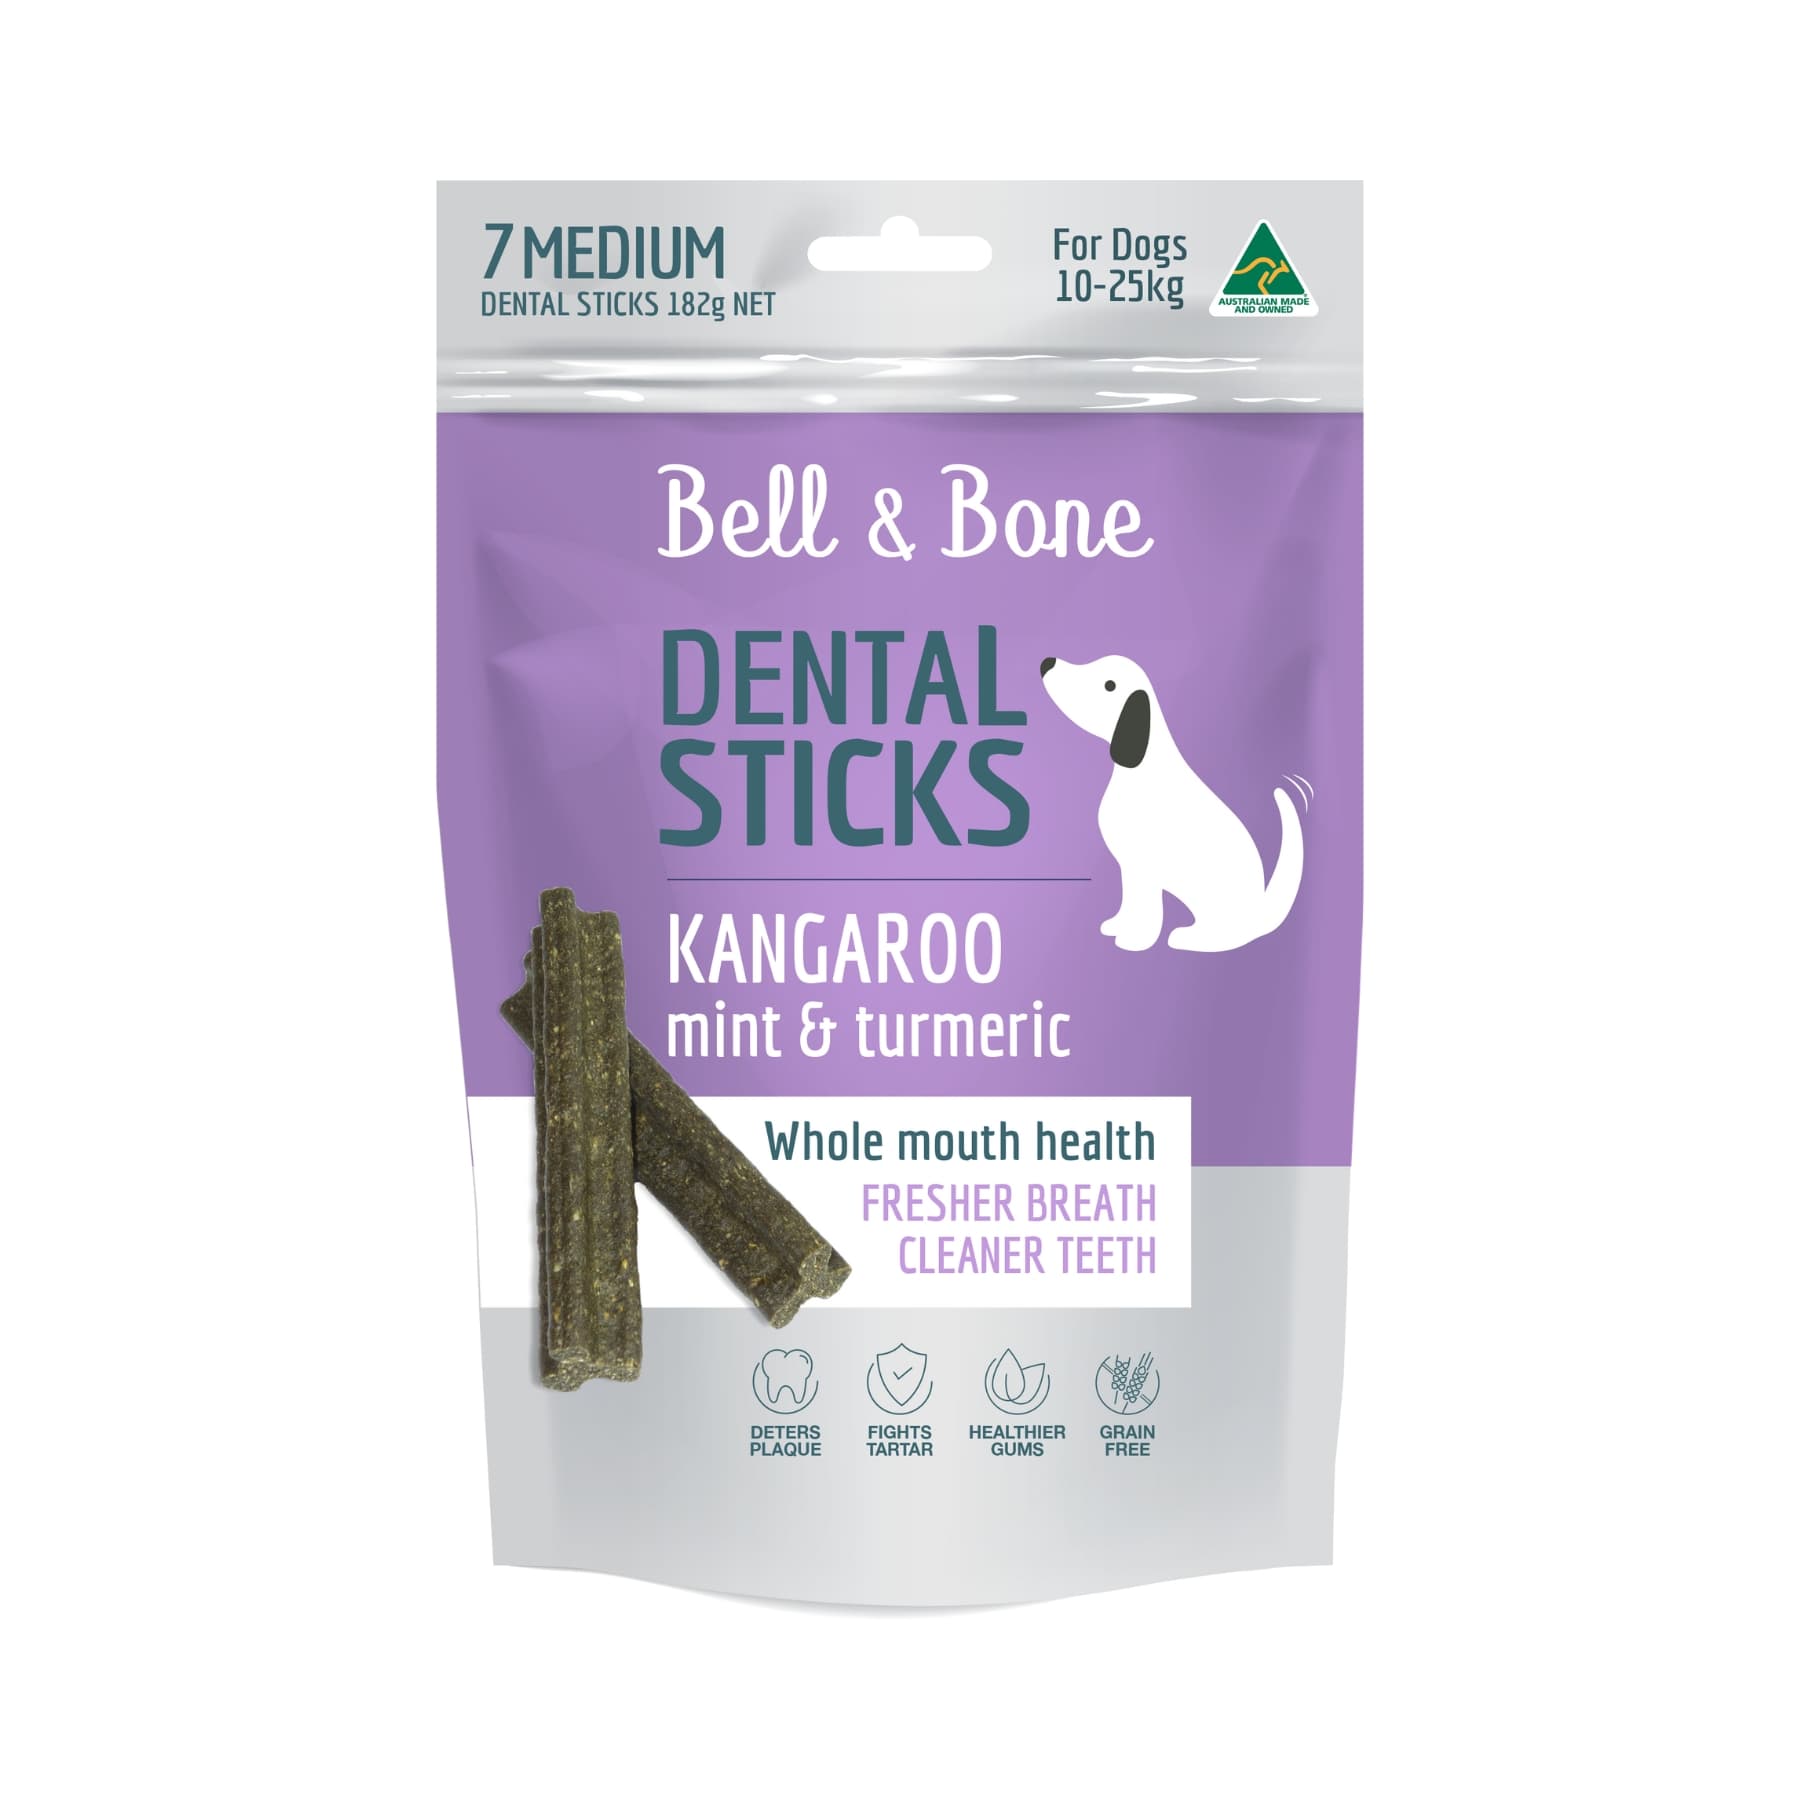 Bell & Bone Dental Sticks Kangaroo, Mint & Turmeric Medium. Australian Made Dental Treats for Dogs